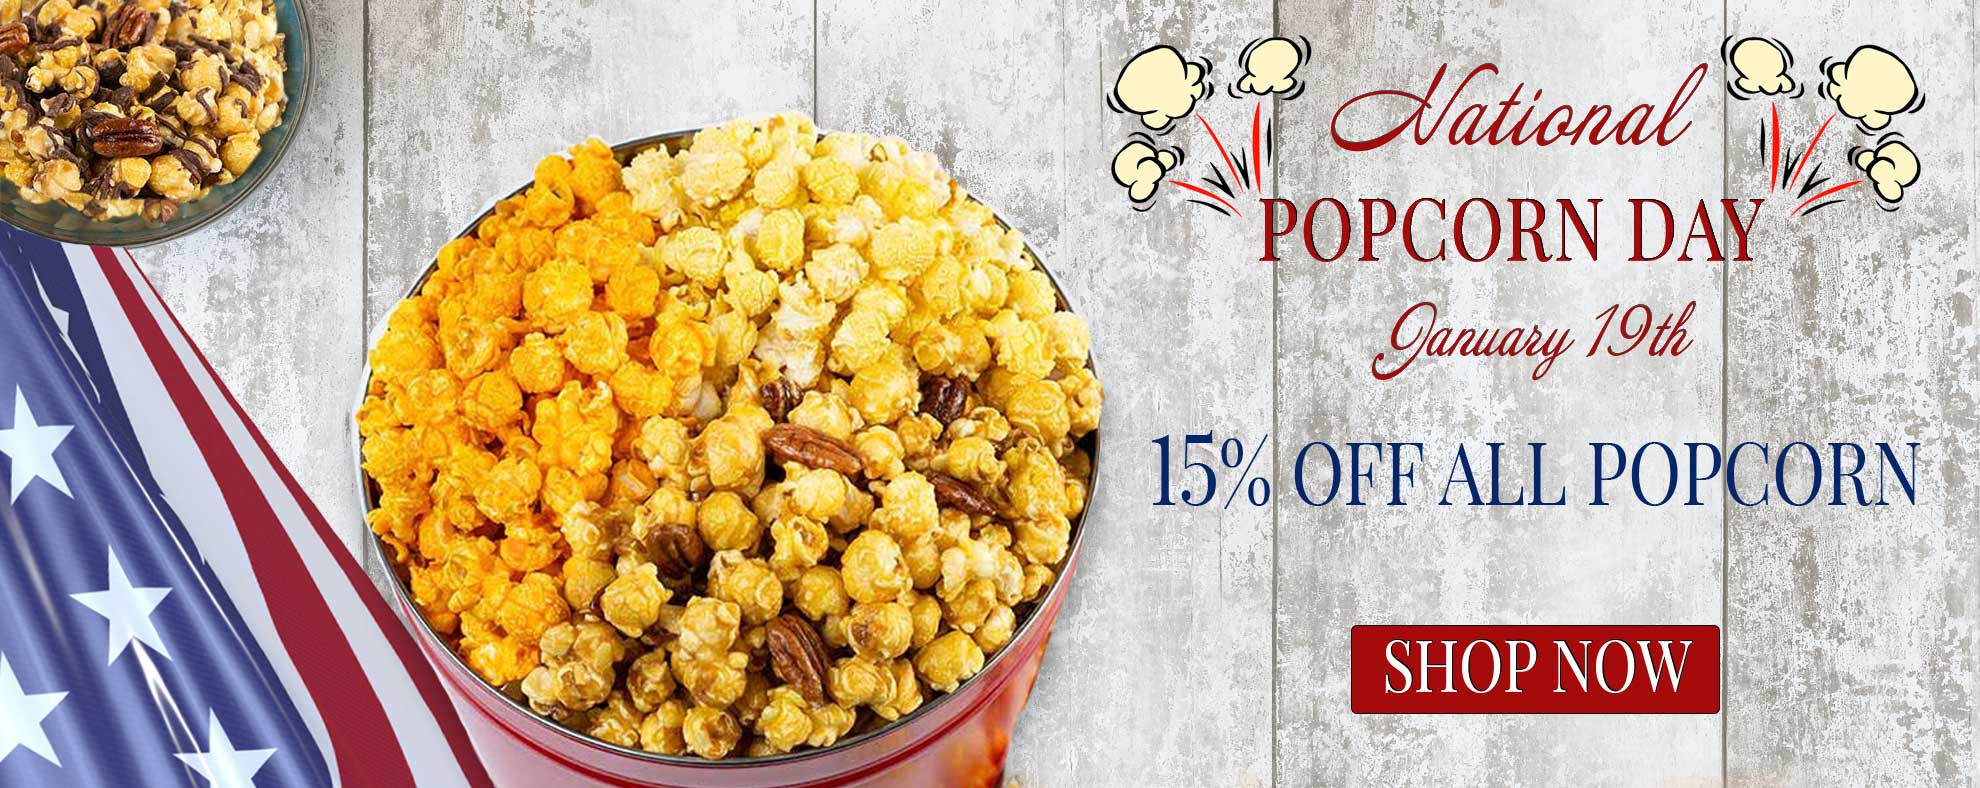 National Popcorn Day Offer